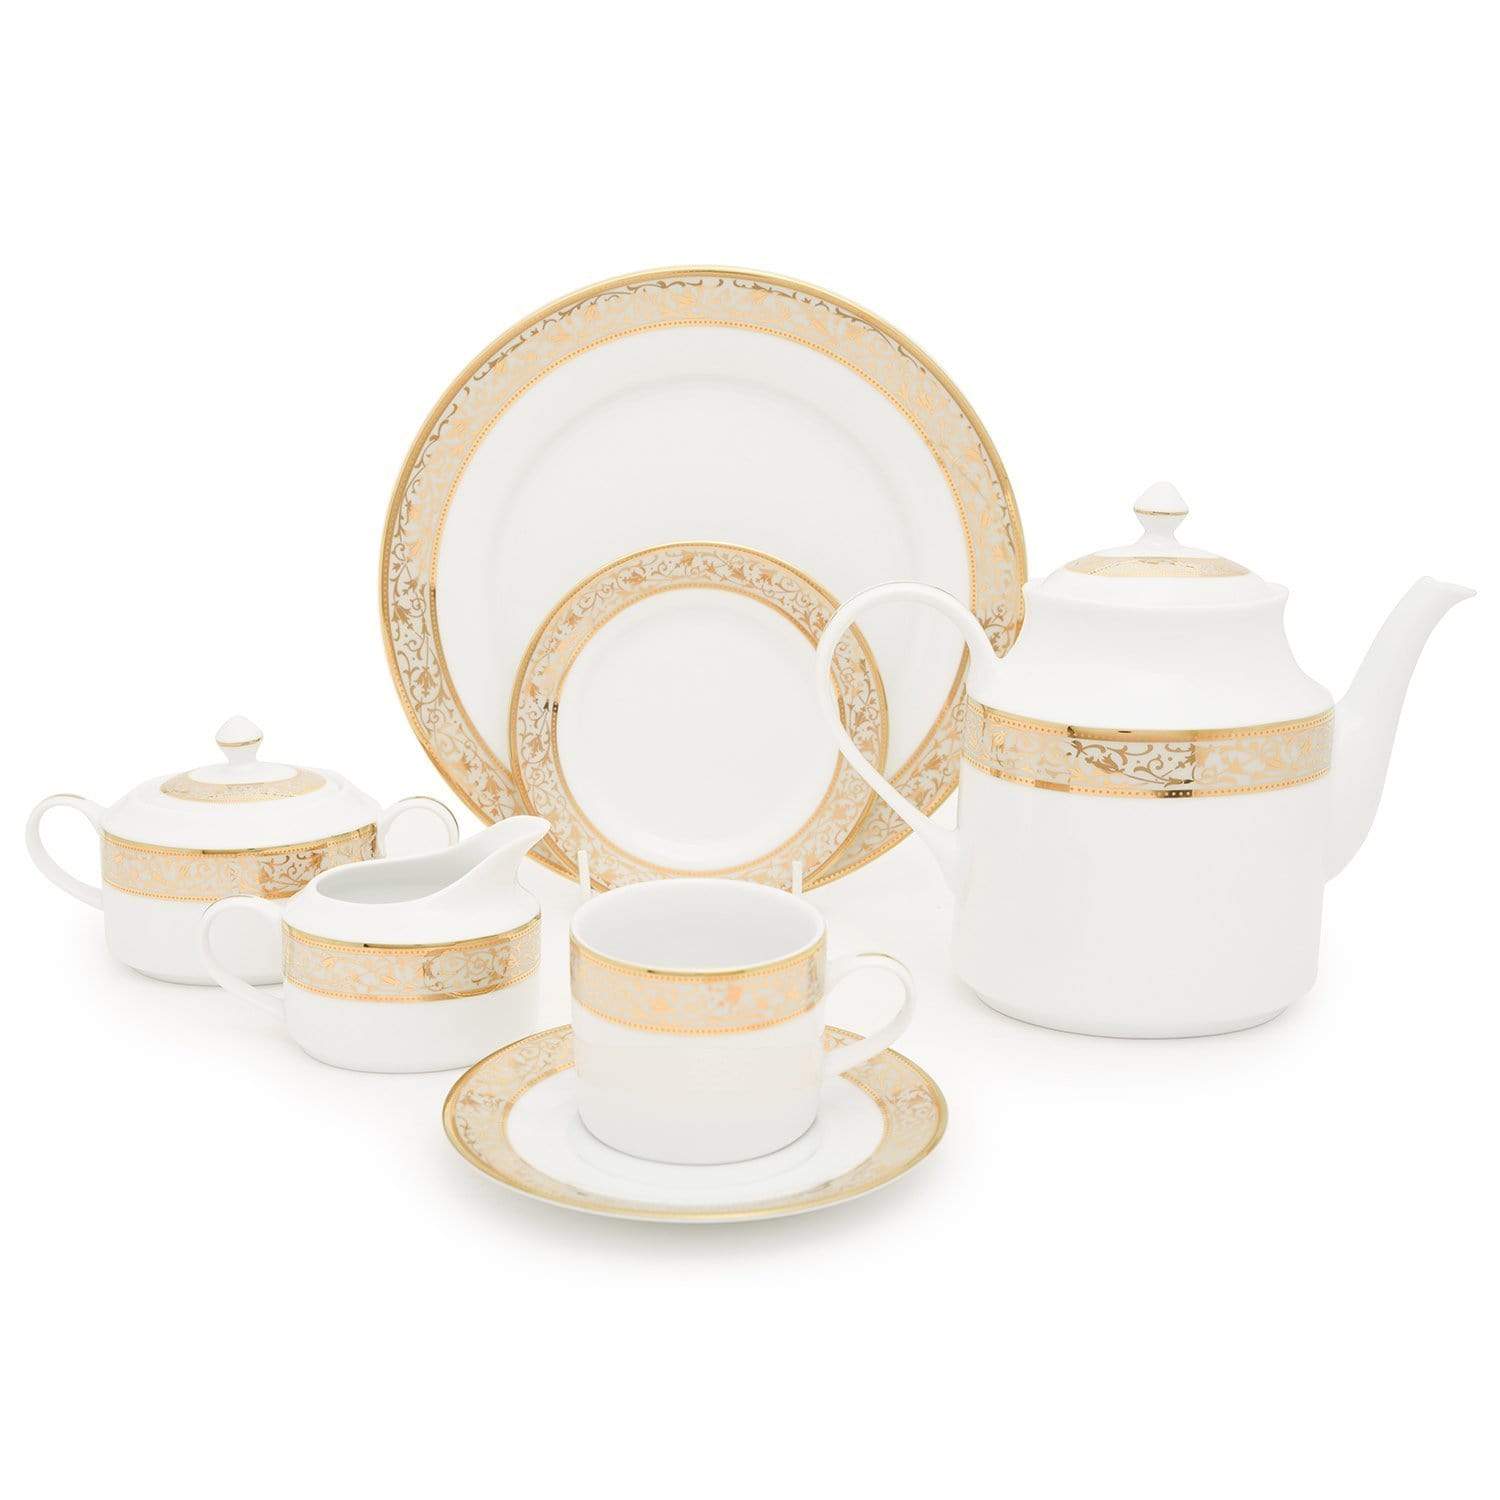 Dankotuwa Porcelain Catherina Tea Set - Gold, 24 Piece - CATH-24TS - Jashanmal Home